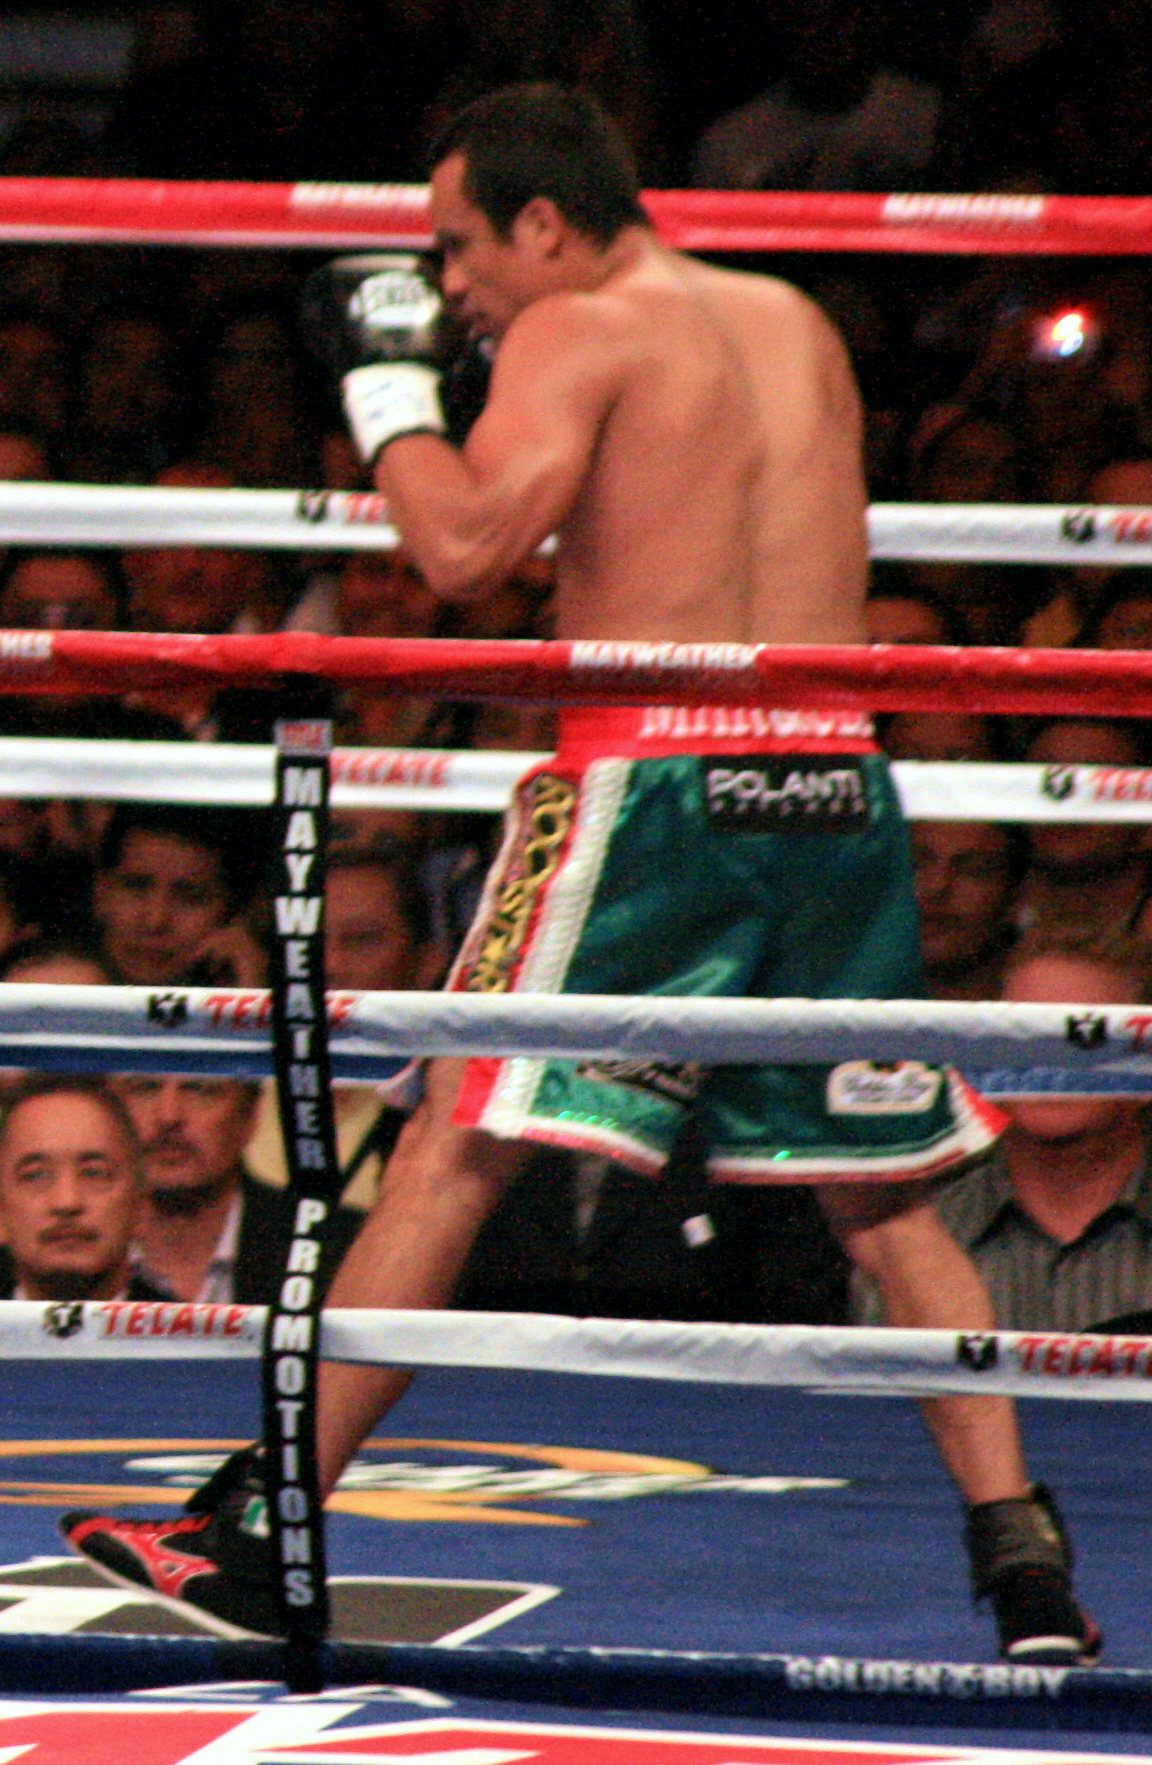 Boxer fighting